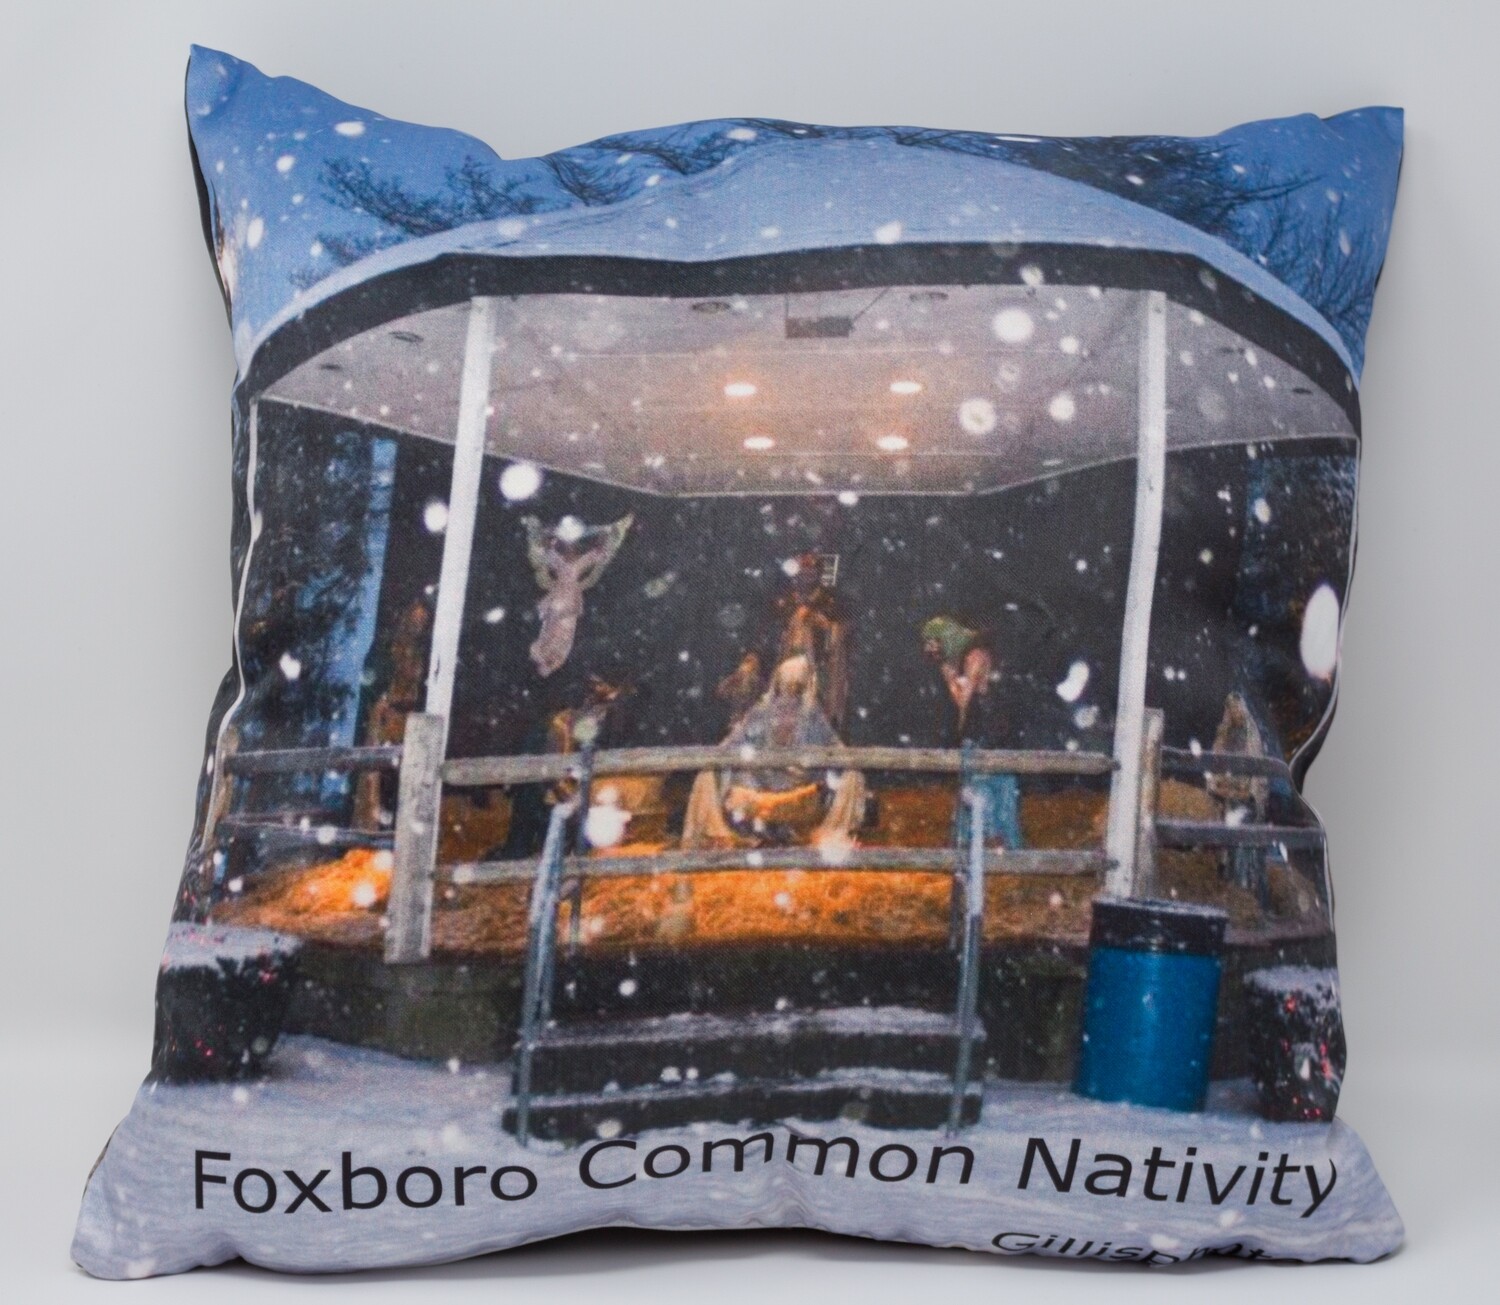 Foxboro Gallery-14"x14"Double Sided Photo Image Pillow-Foxboro Nativity Scene at Christmas